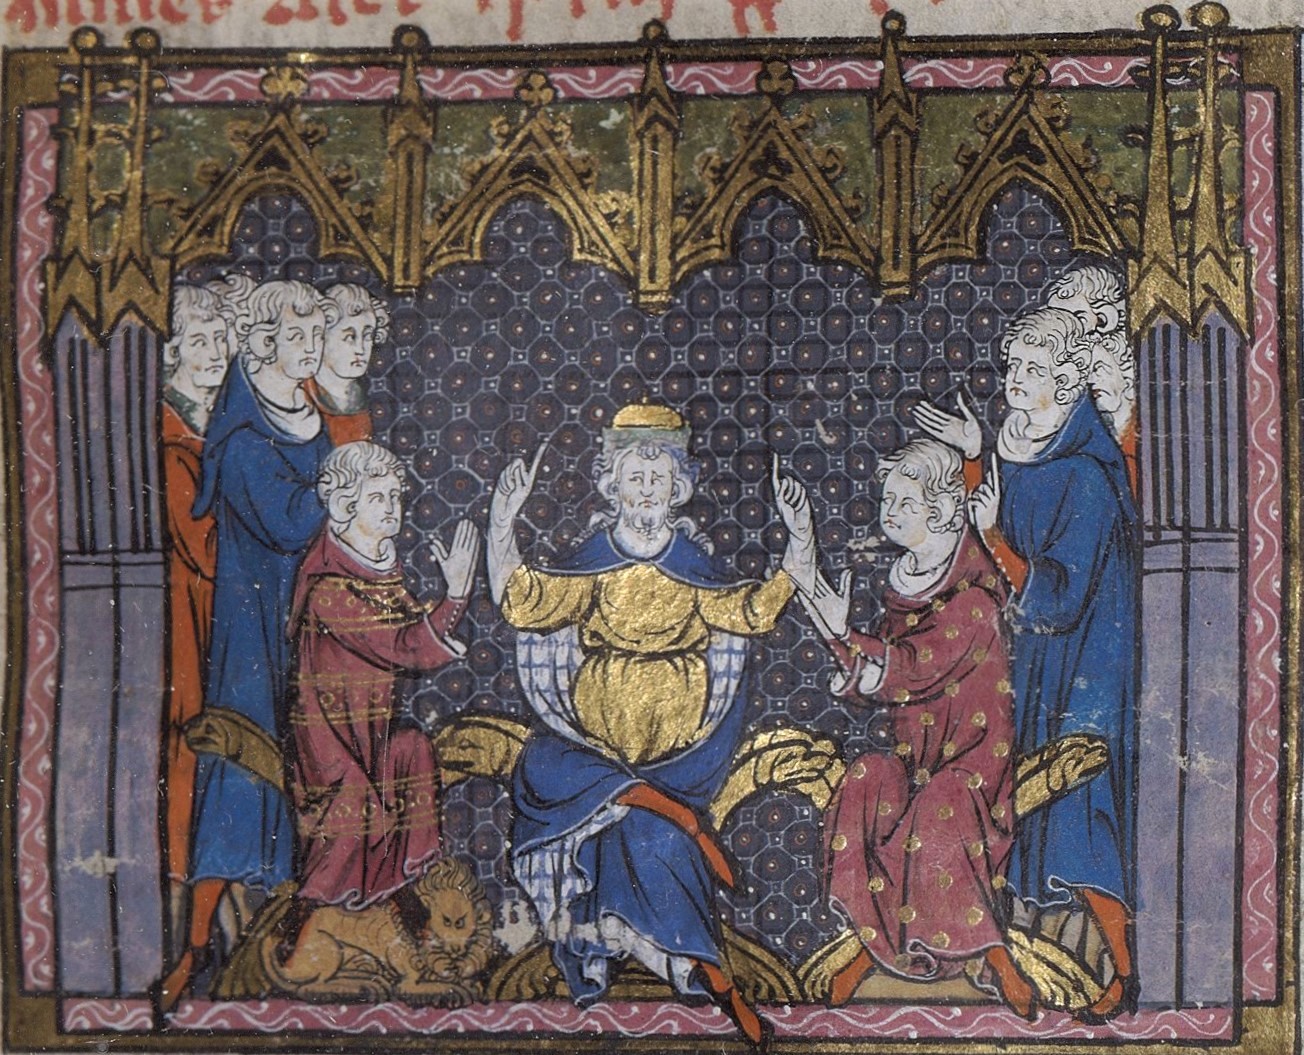 An image of Charles Martel dividing his kingdom between his sons Pepin and Carloman